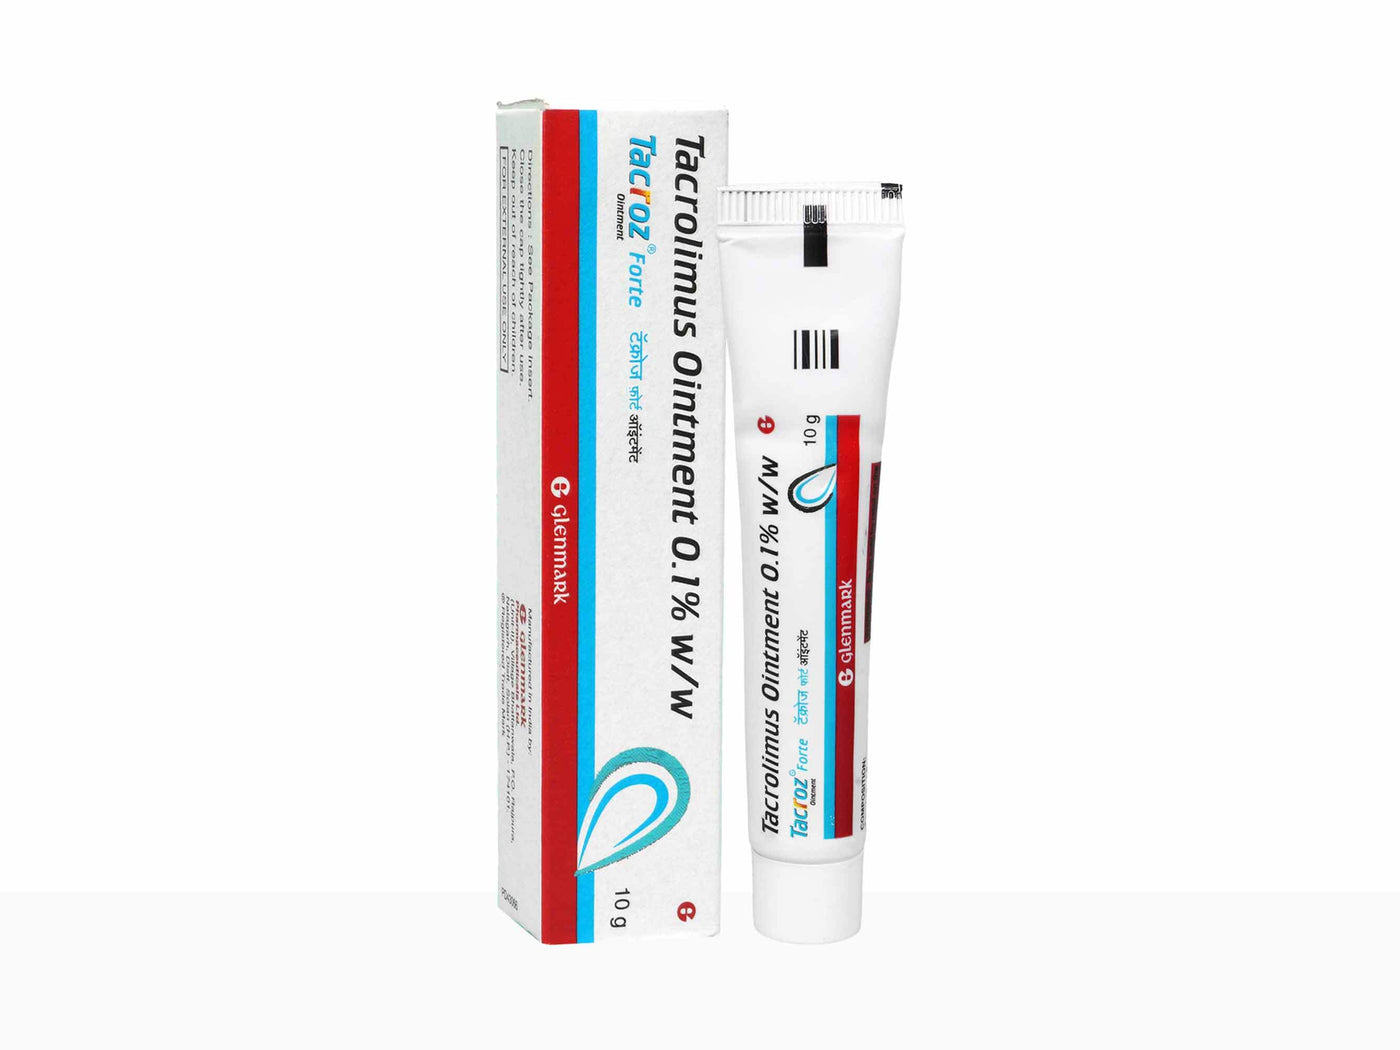 Tacroz Forte ointment - Clinikall